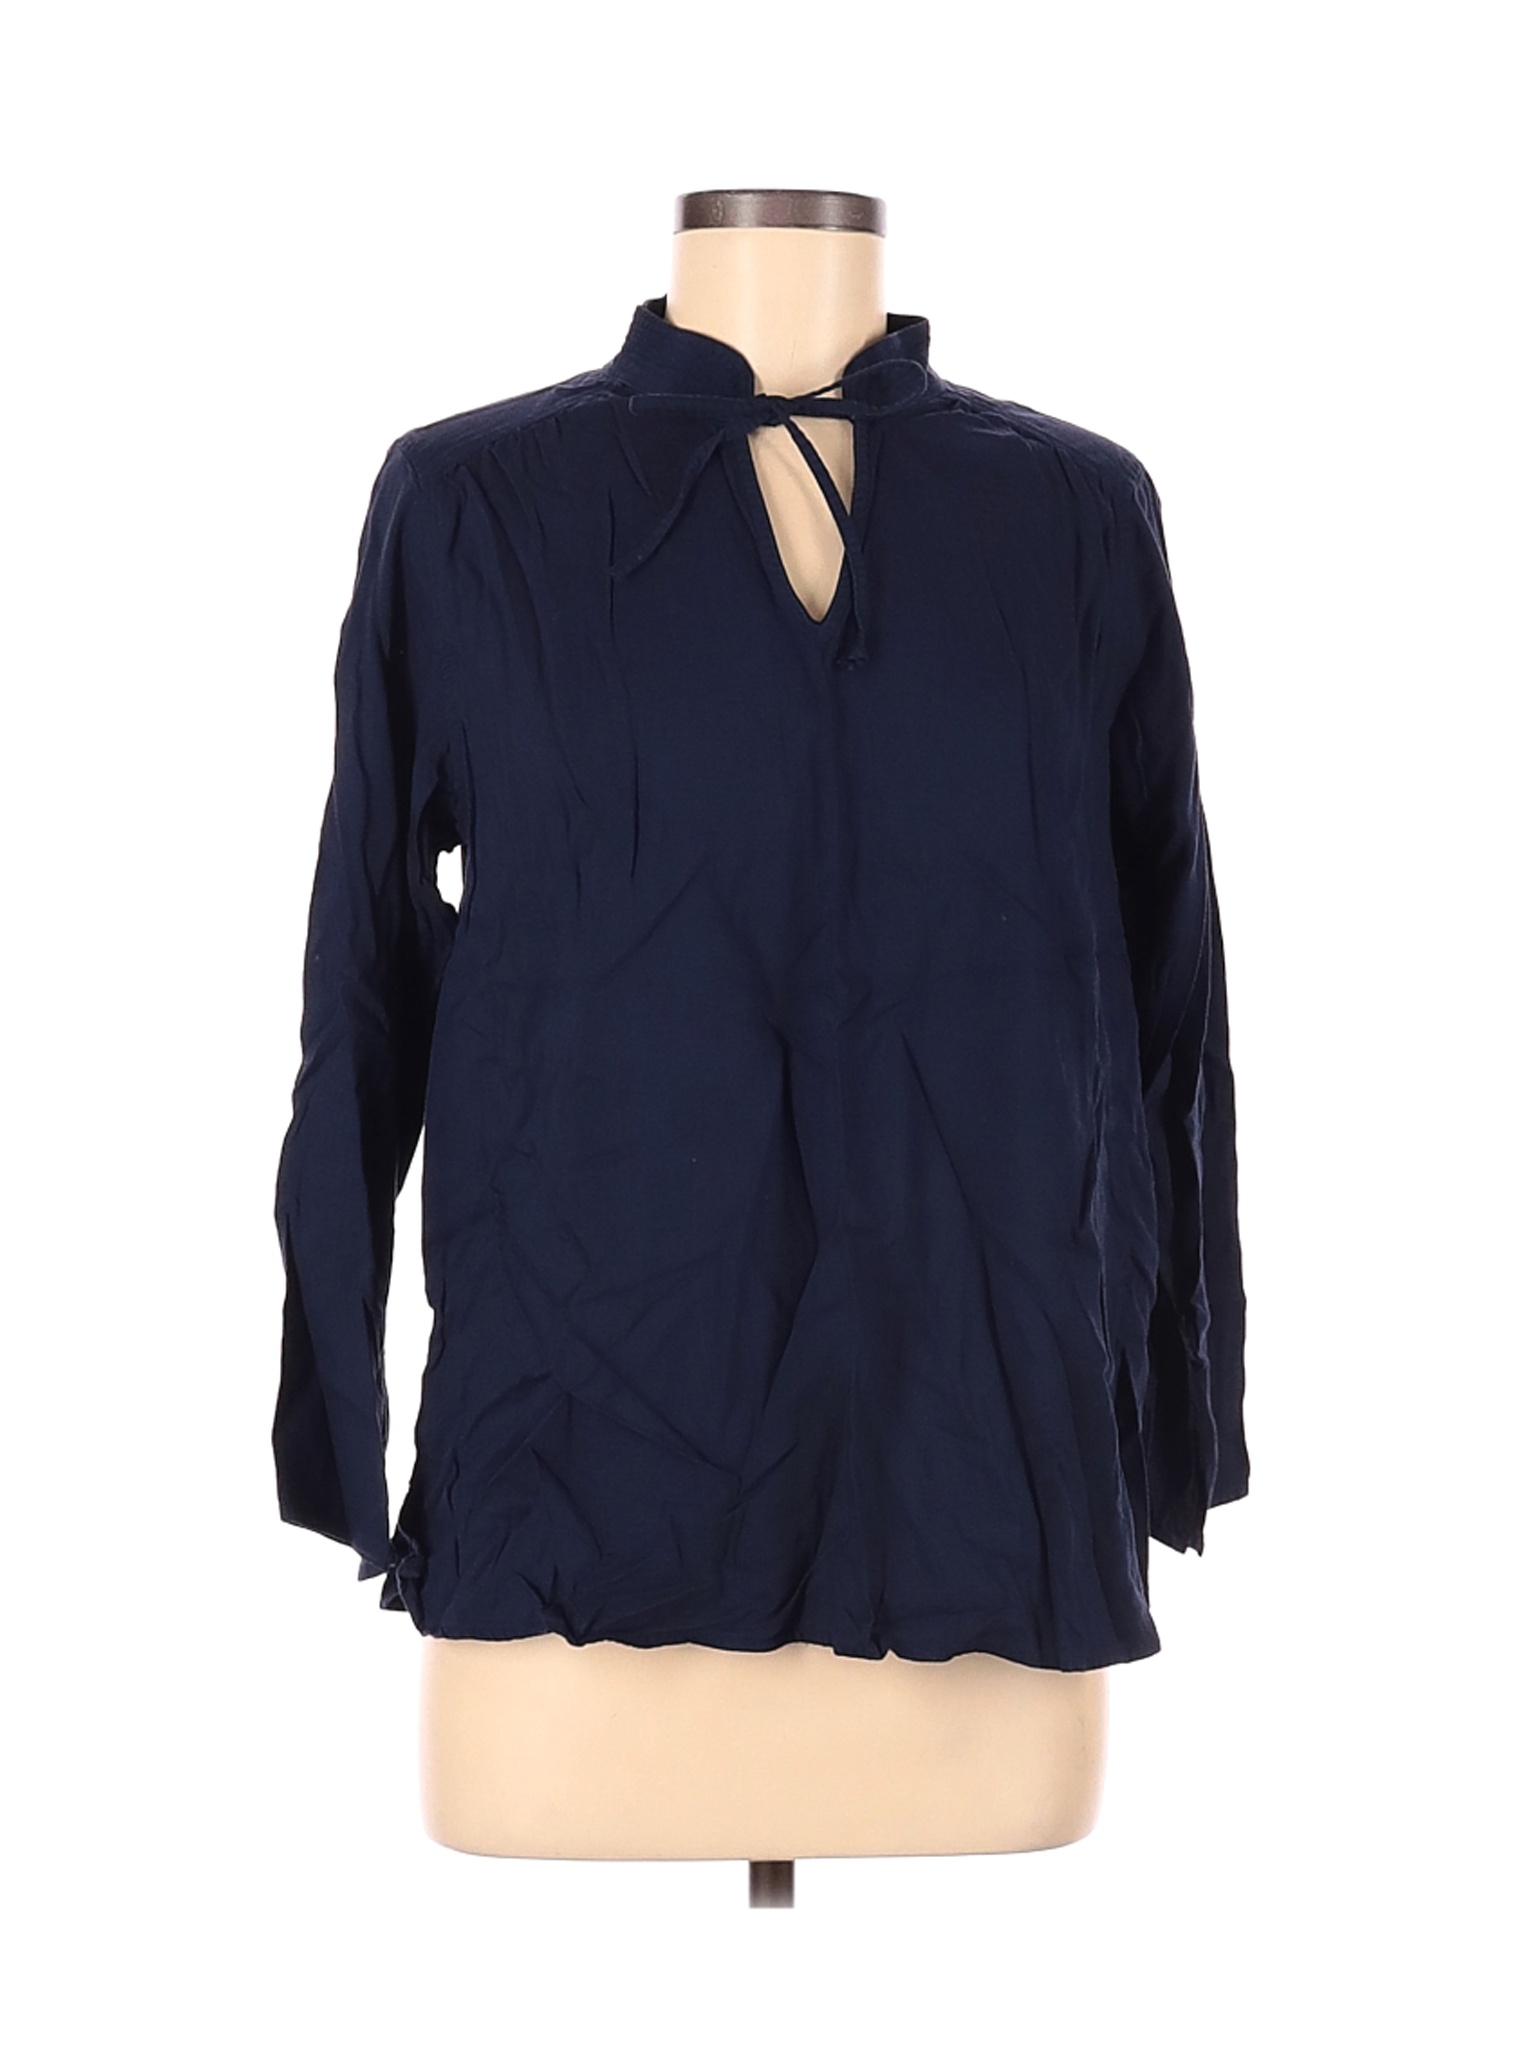 Old Navy Women Blue Long Sleeve Blouse M | eBay